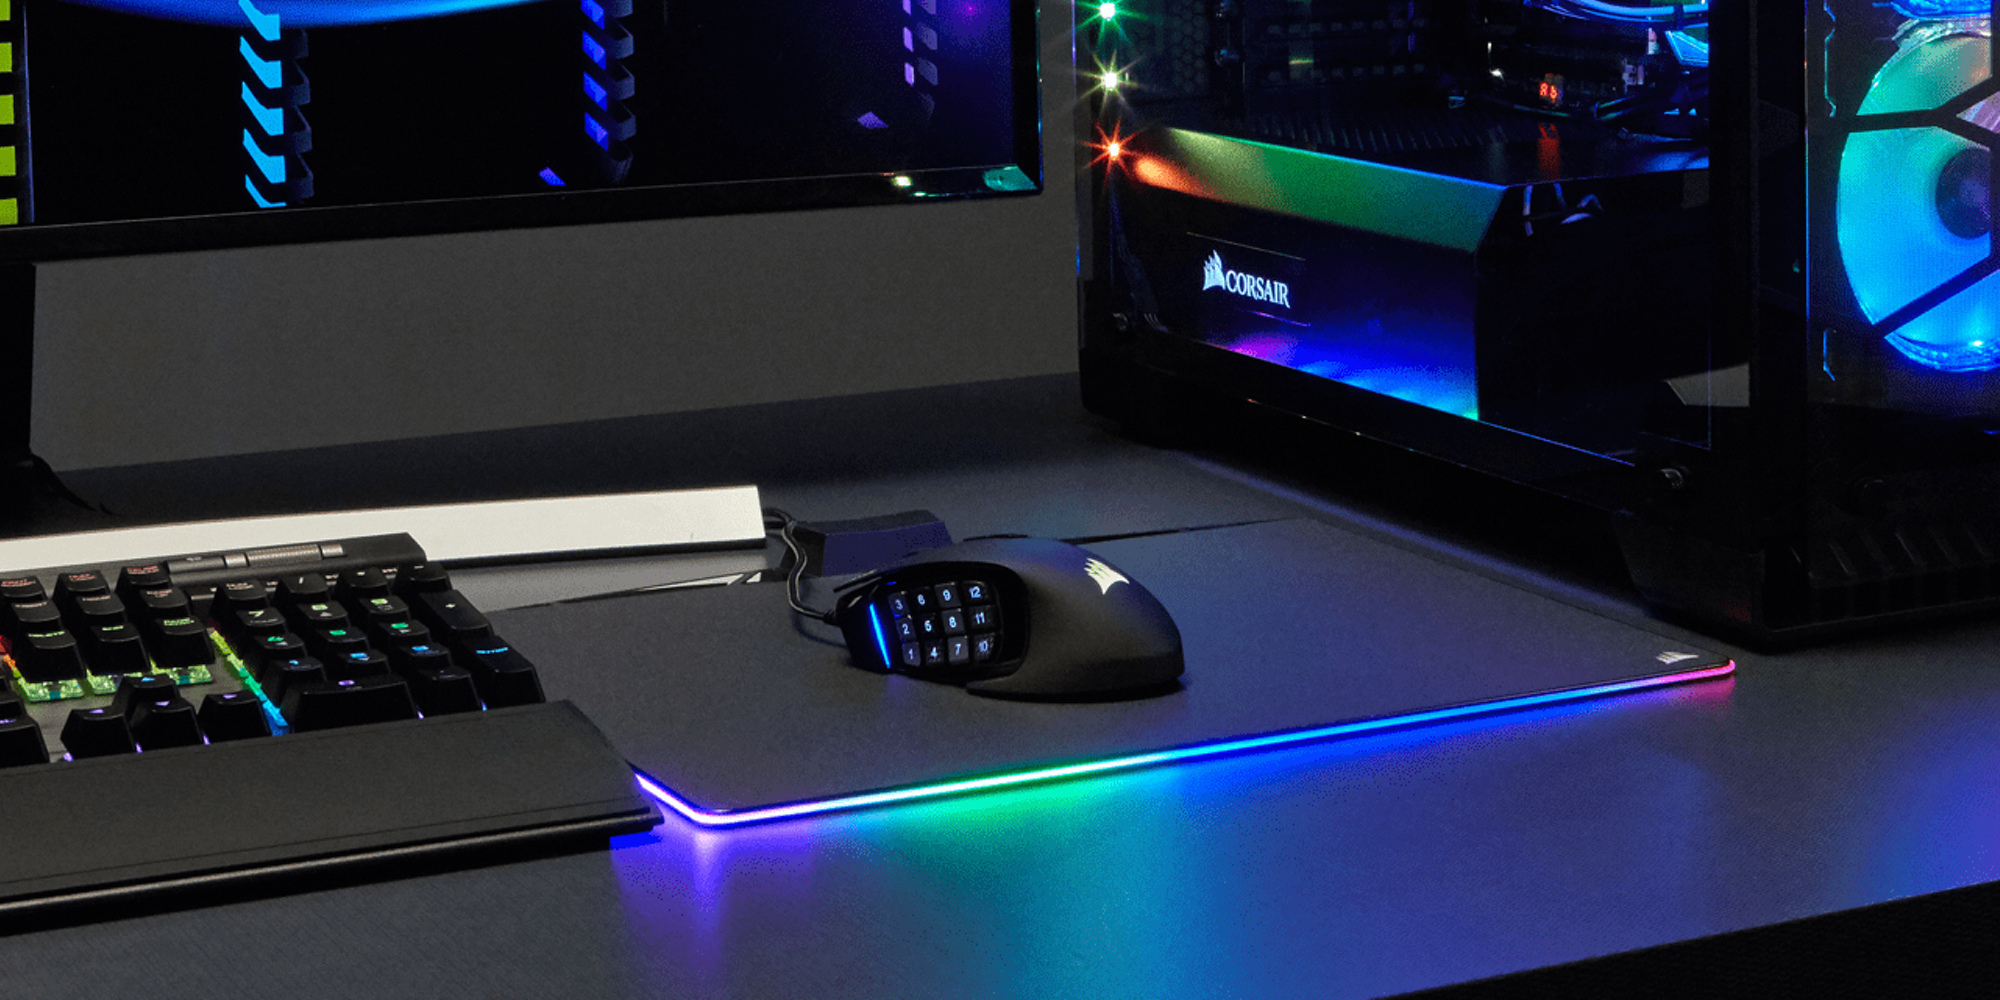 CORSAIR's Polaris Mouse Pad rounds out your battlestation RGB lighting (Reg. $60)